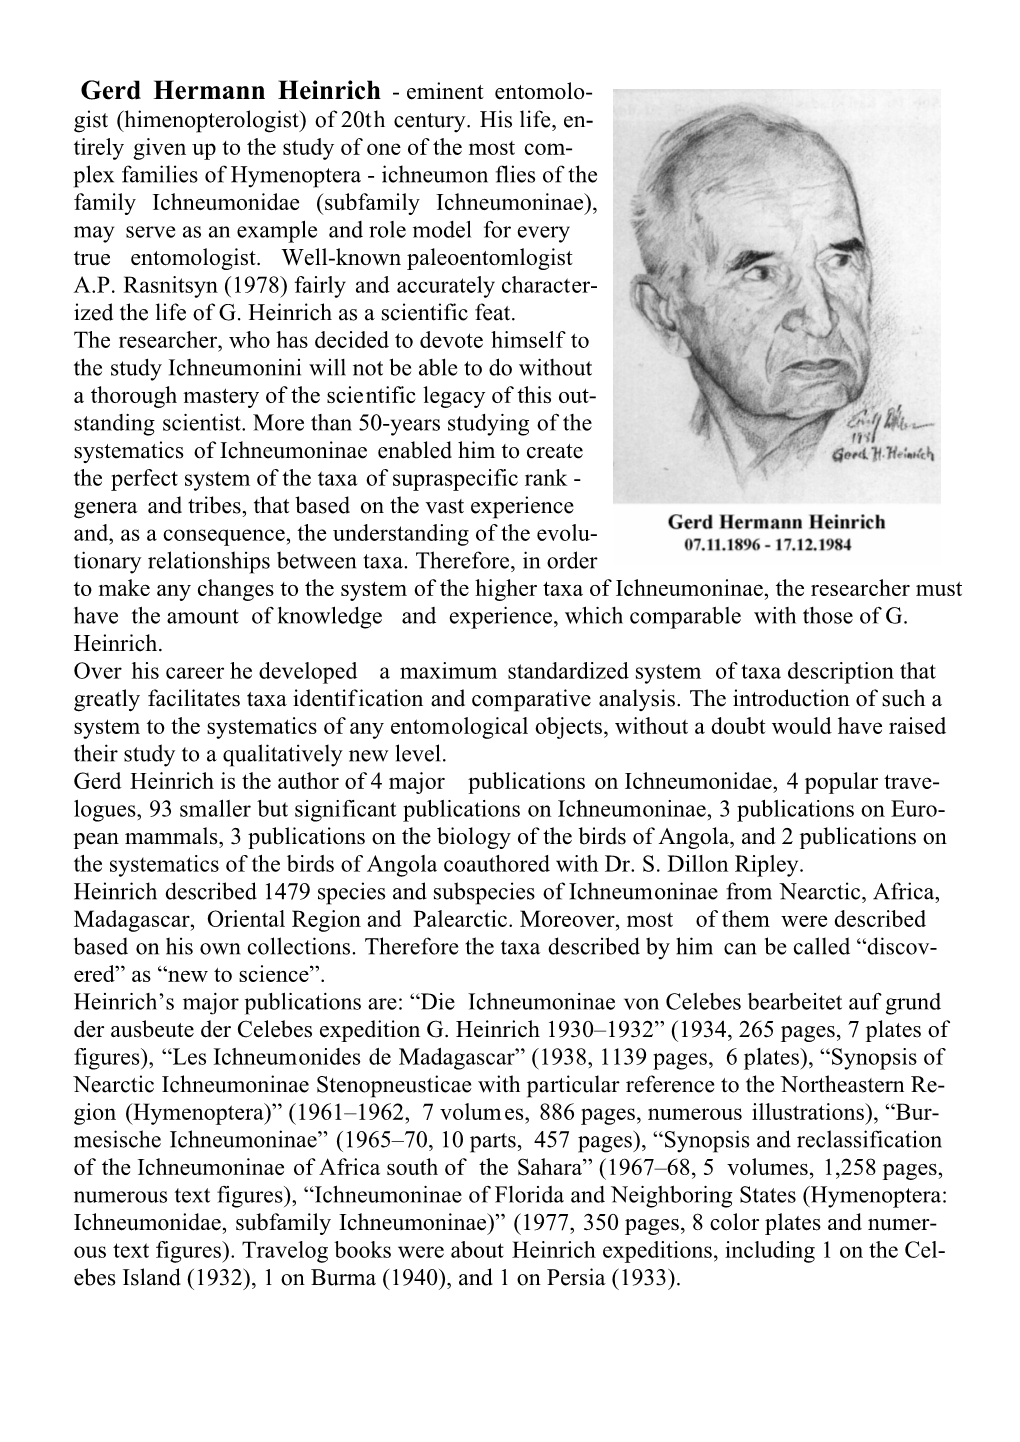 Gerd Hermann Heinrich - Eminent Entomolo- Gist (Himenopterologist) of 20Th Century